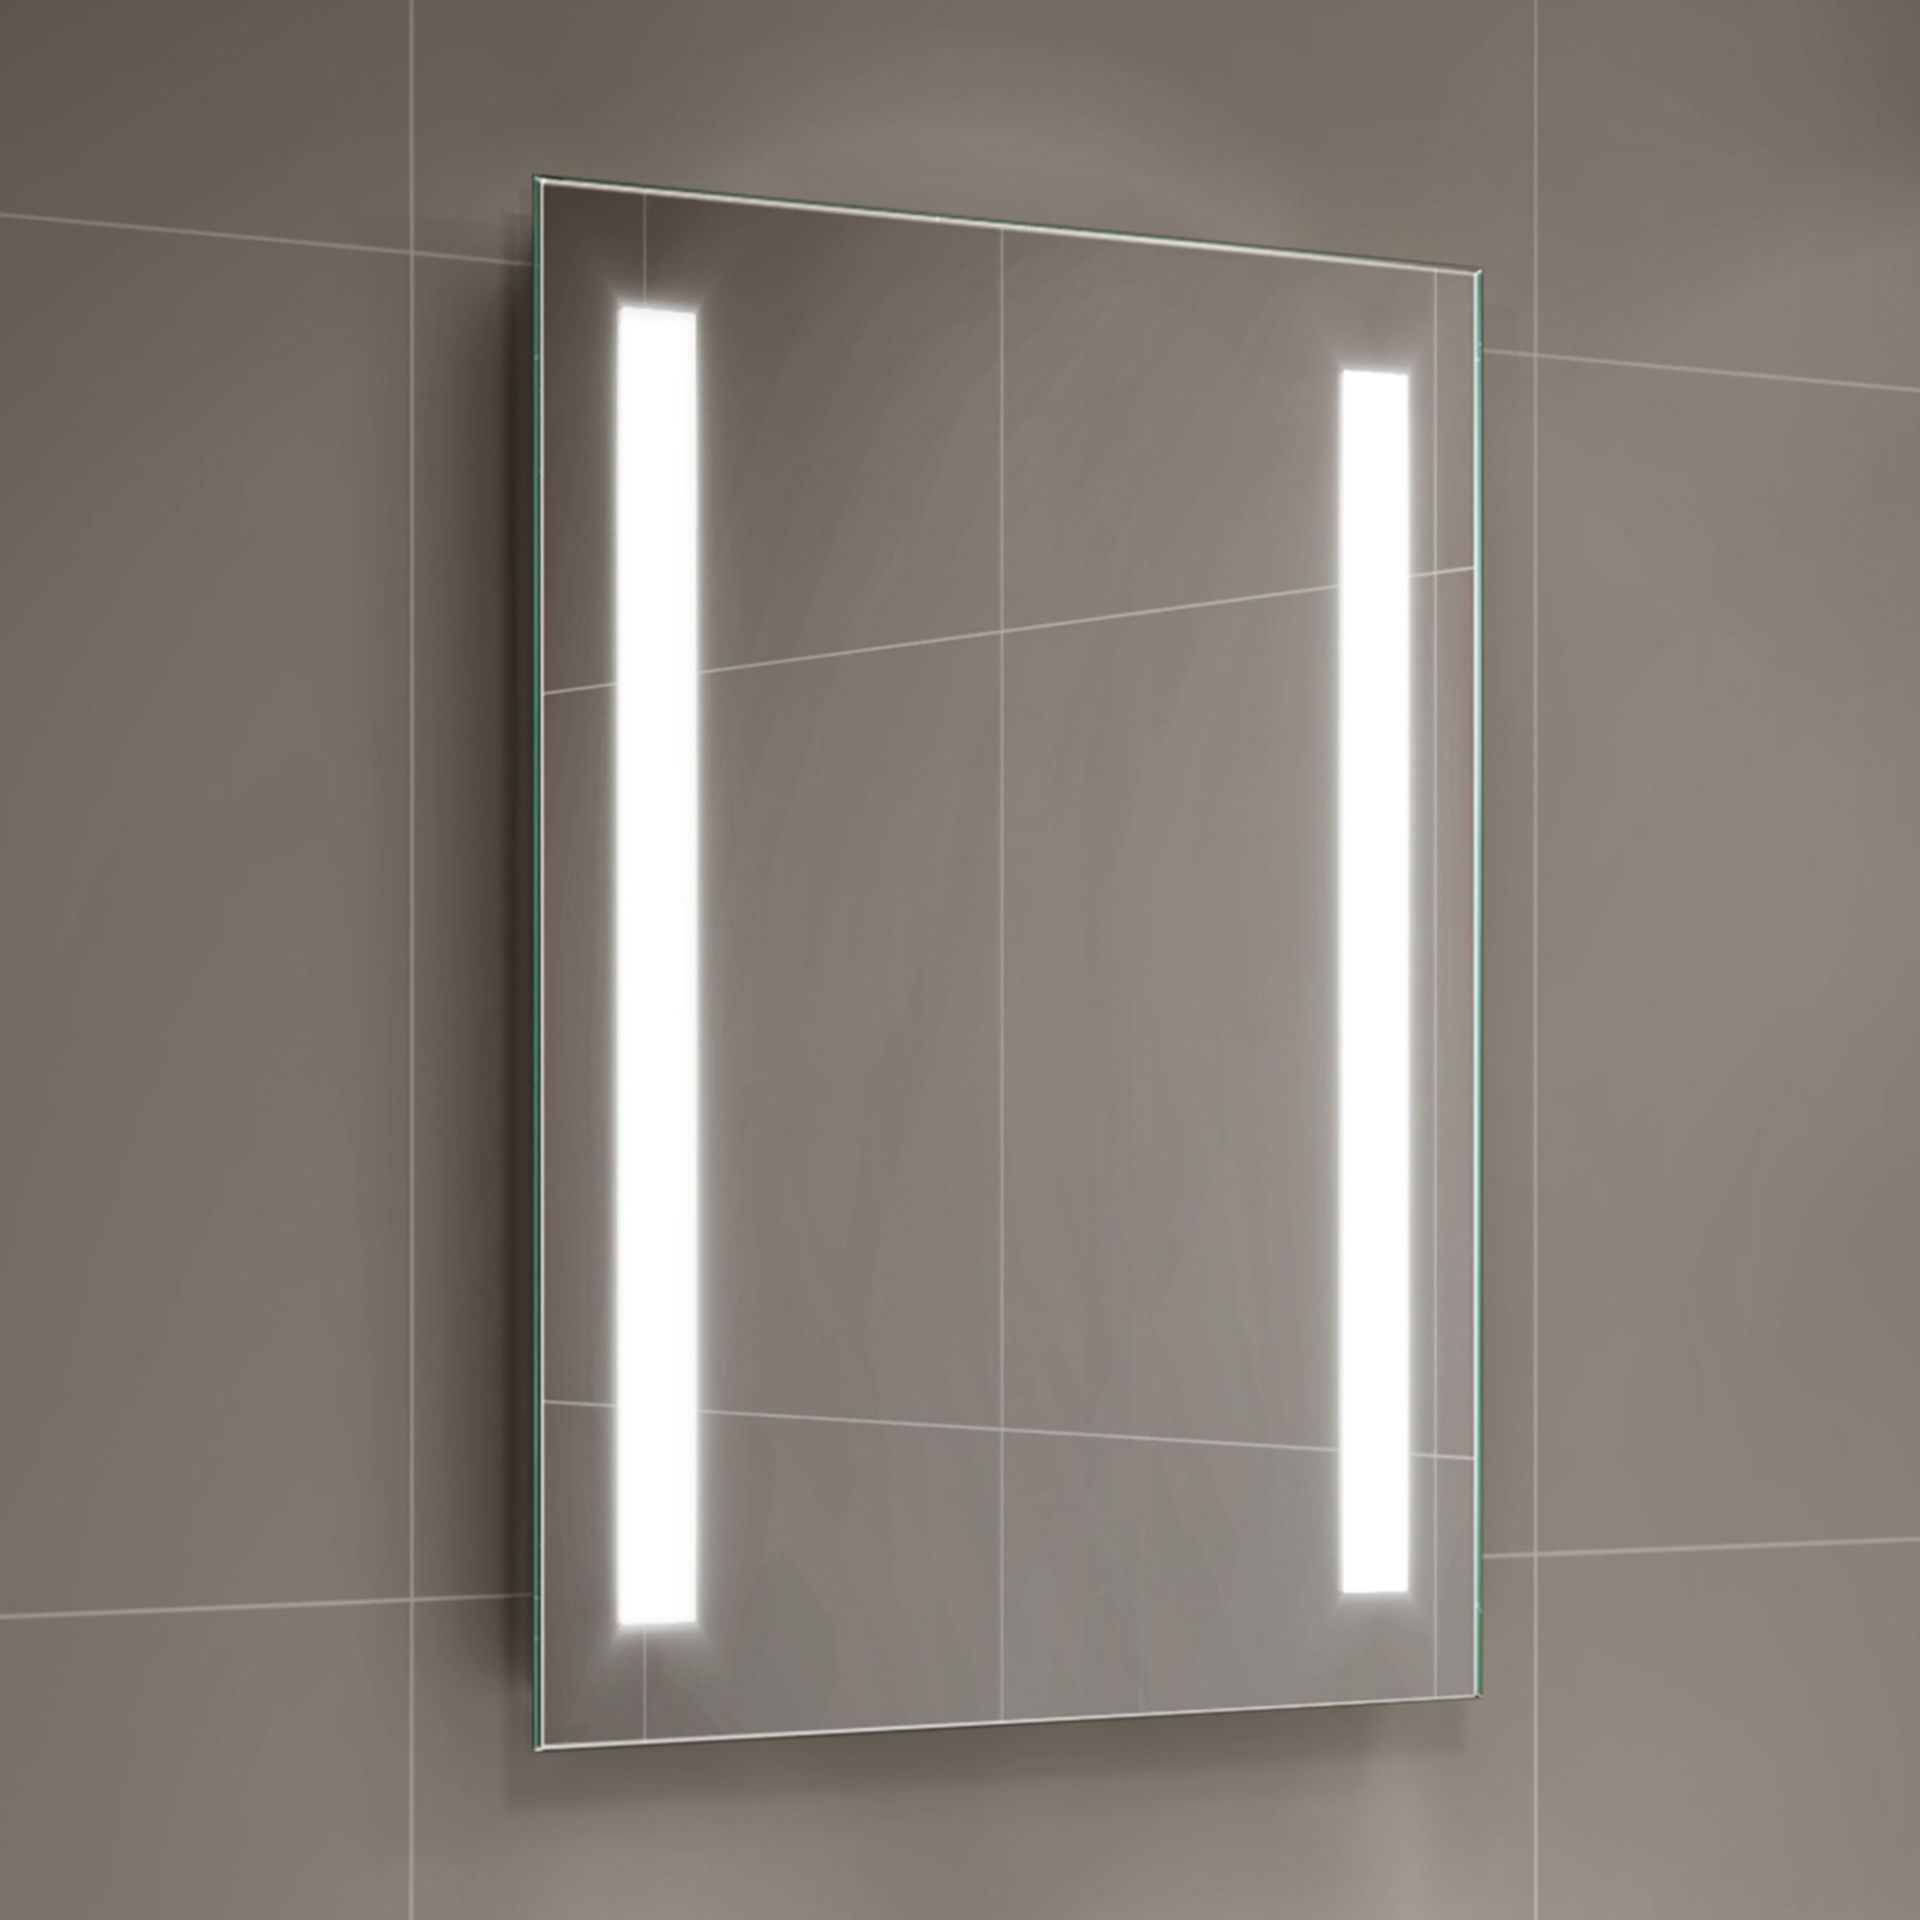 NEW 600x450mm Omega Illuminated LED Mirror. RRP £349.99.ML2108.Energy saving controlled On / Off